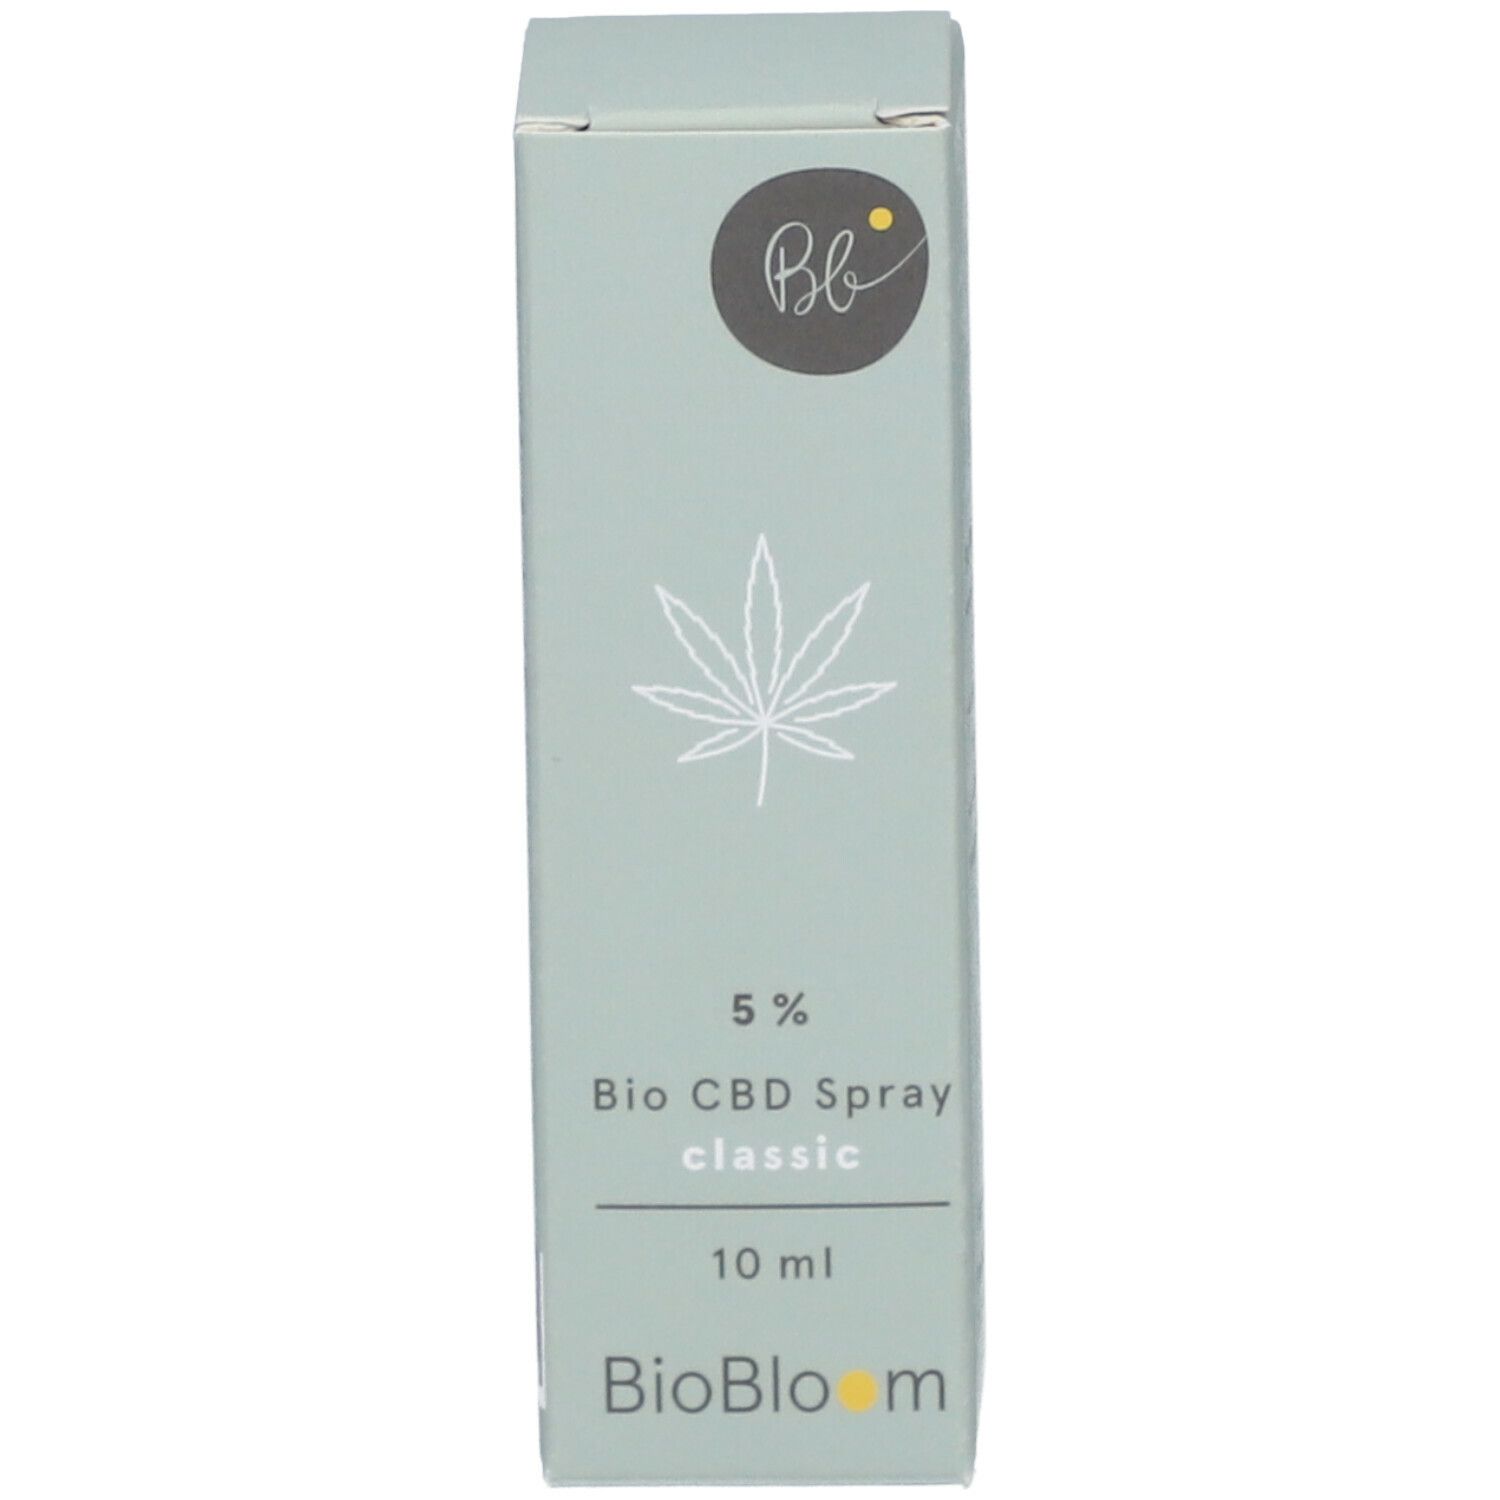 BioBloom classic 5% Bio CBD Spray